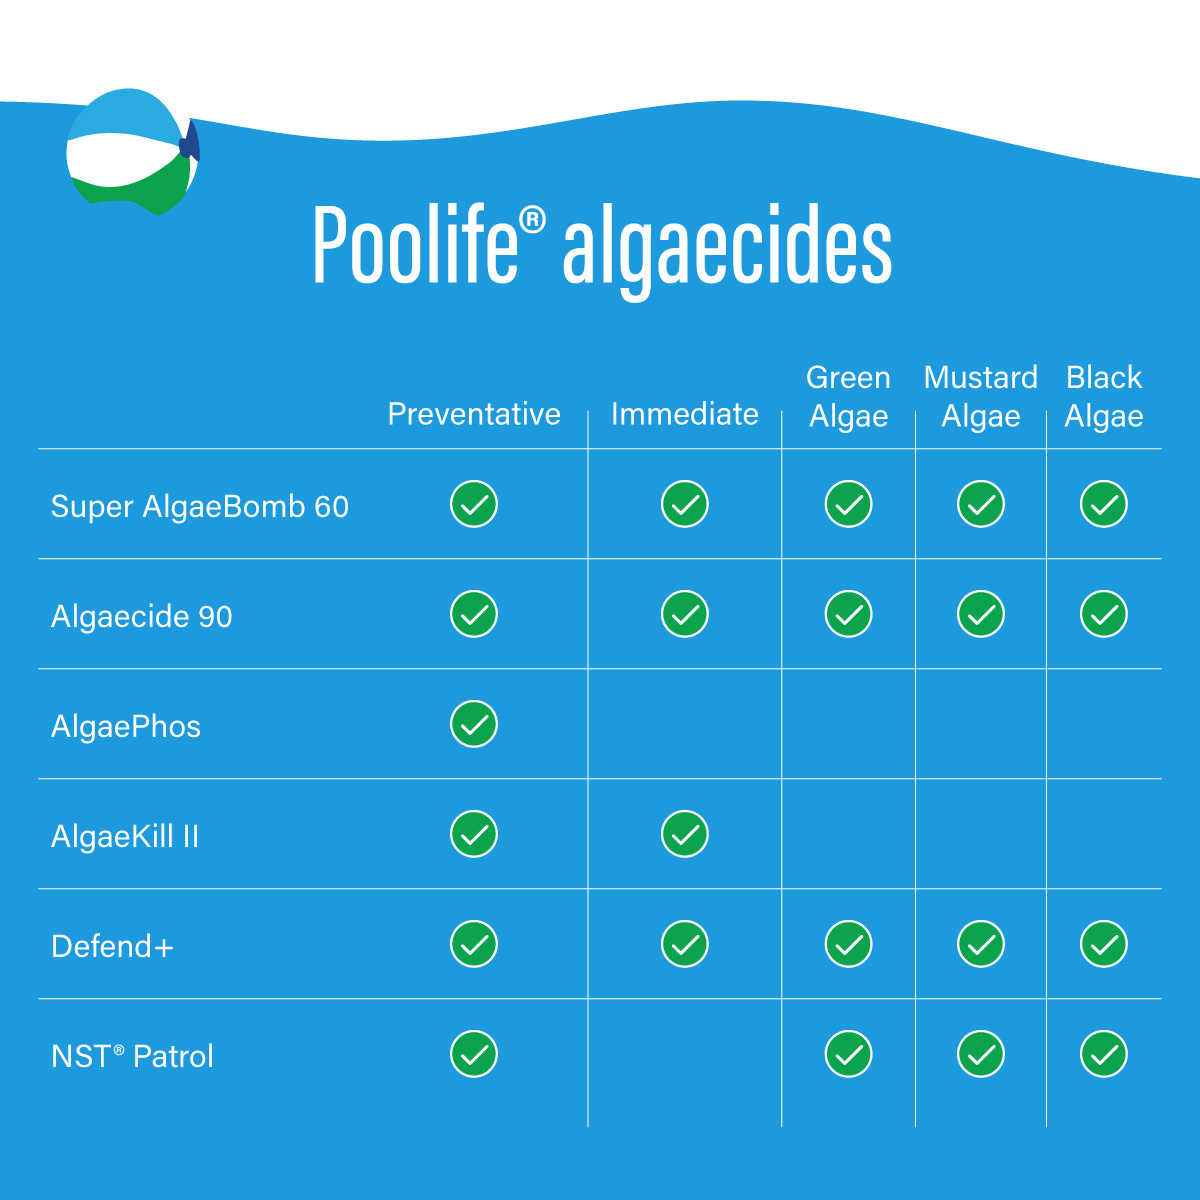 Poolife algaecides chart showing all checks for this product: Preventative, Immediate, Green algae, Mustard Algae, Black Algae